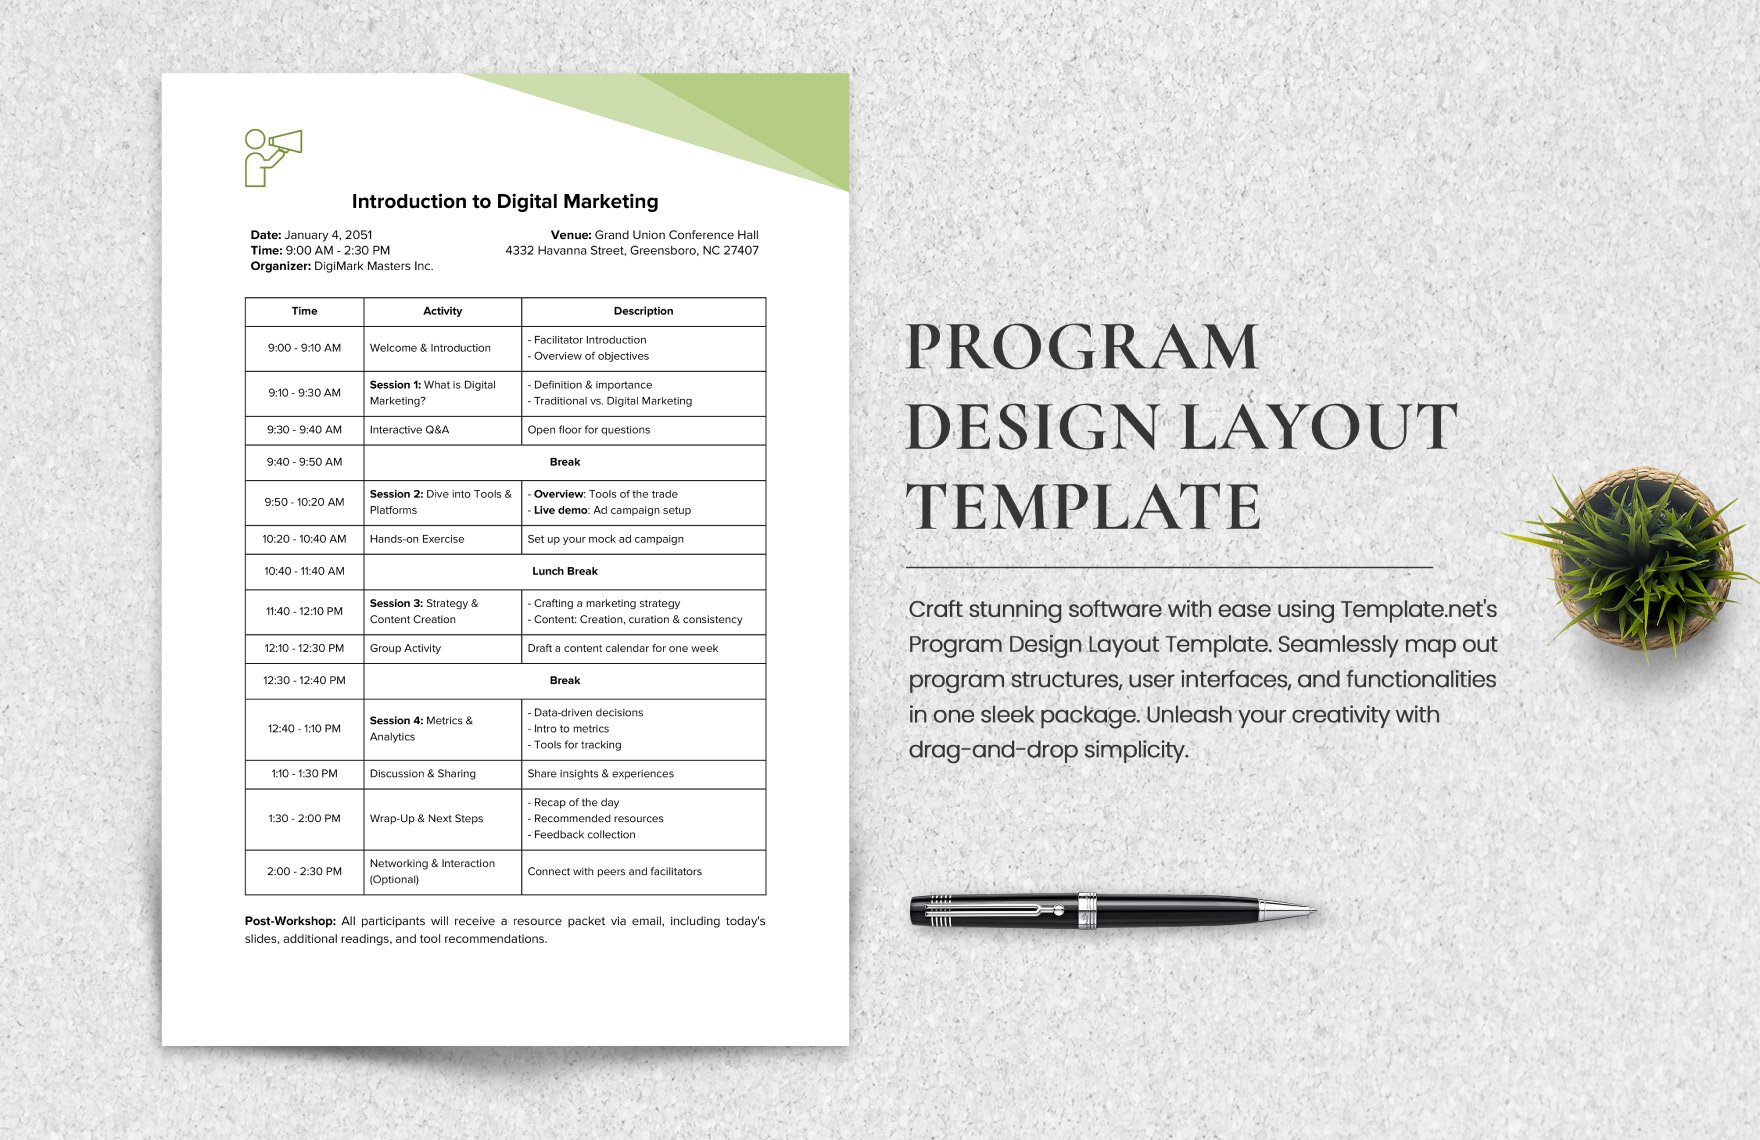 Program Design Layout Template